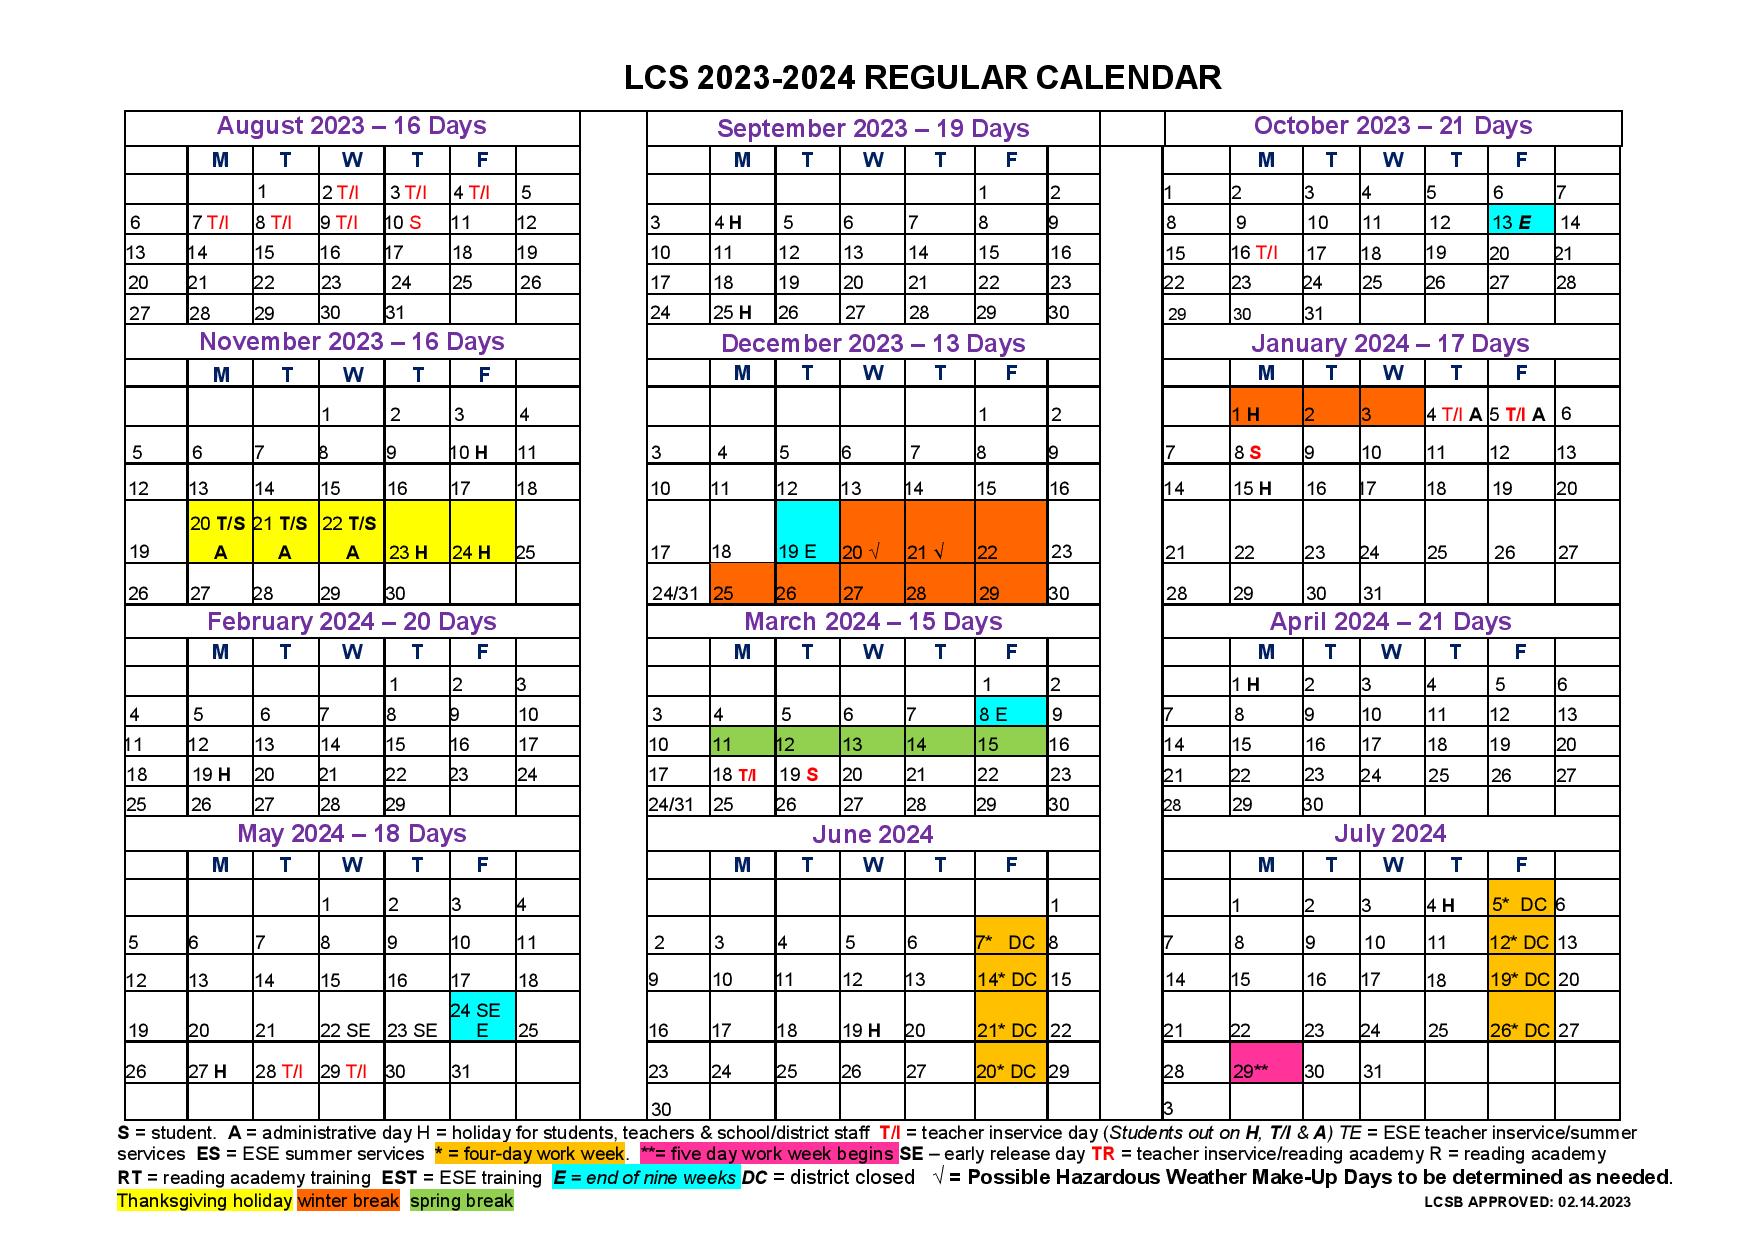 Leon County Schools Calendar Holidays 2023 2024 PDF